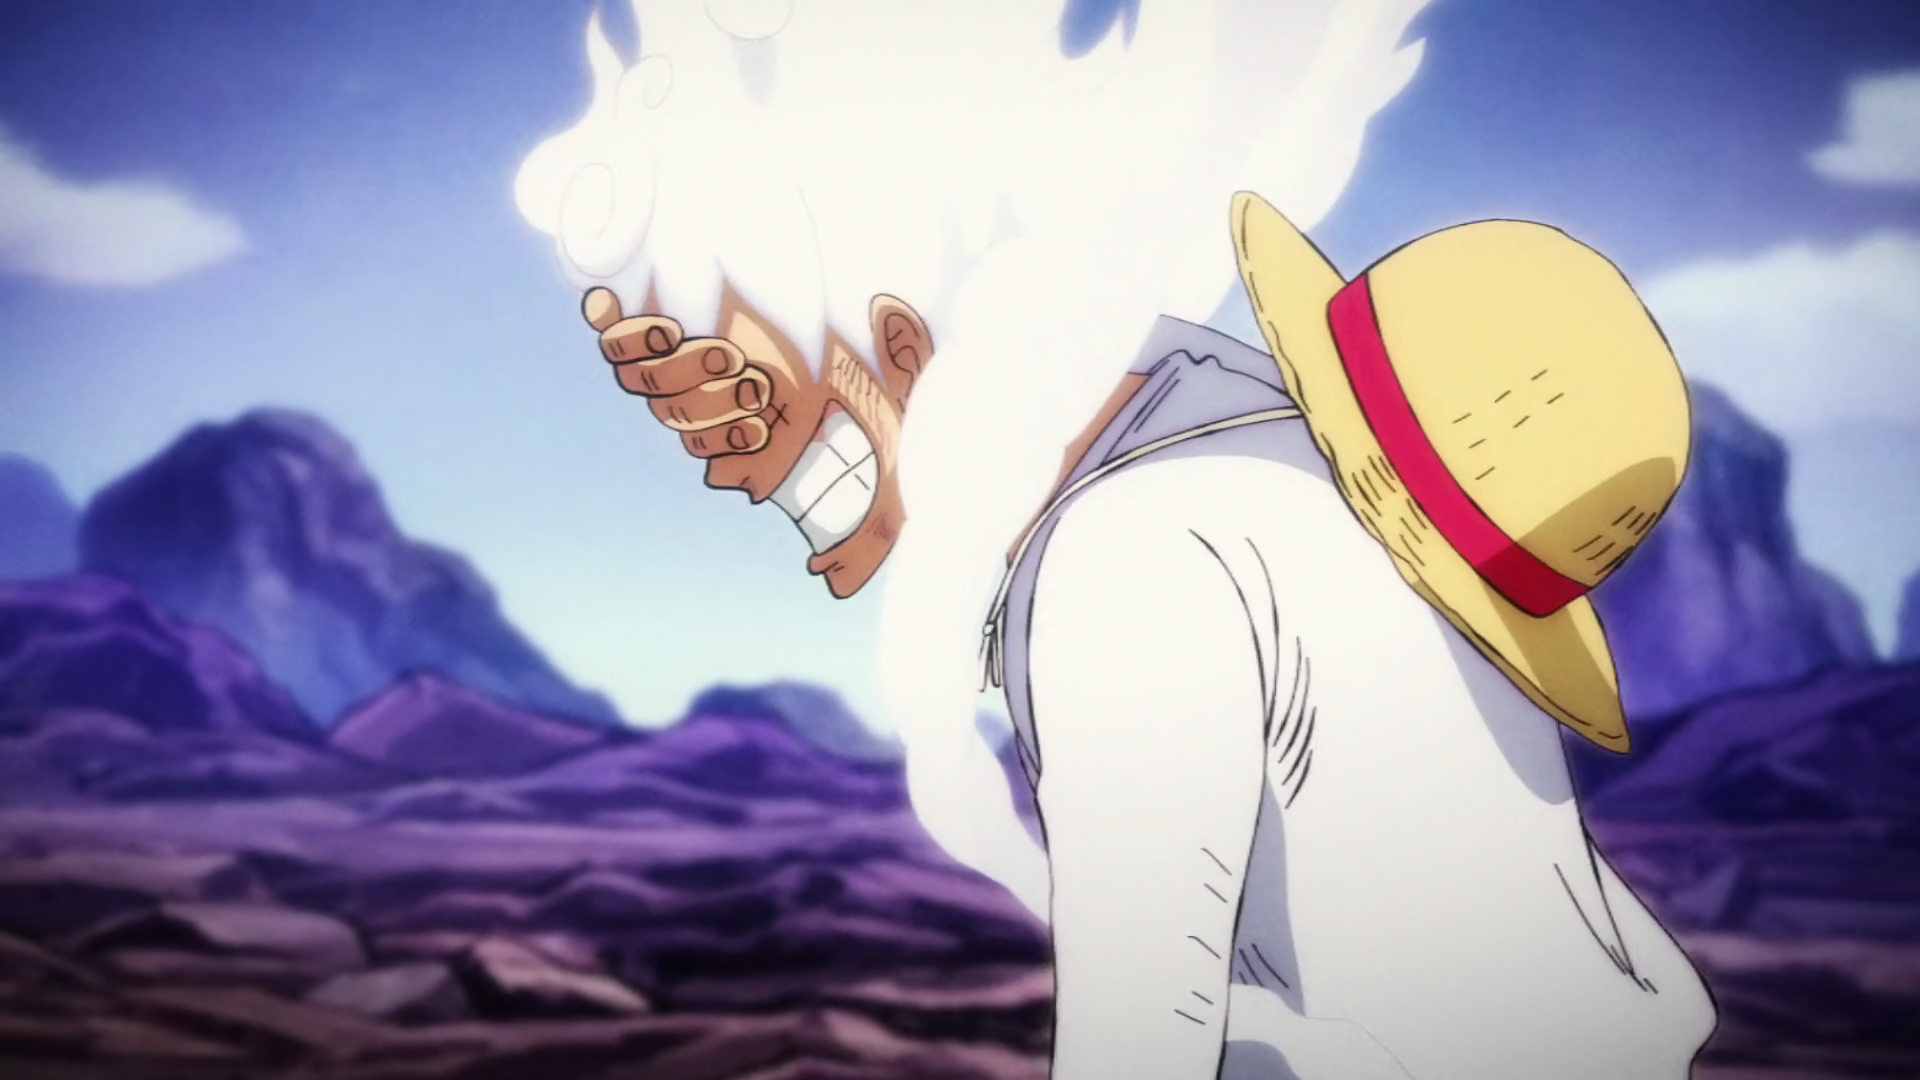 One Piece Episode 1 Screenshot_02 by PrincessPuccadomiNyo on DeviantArt